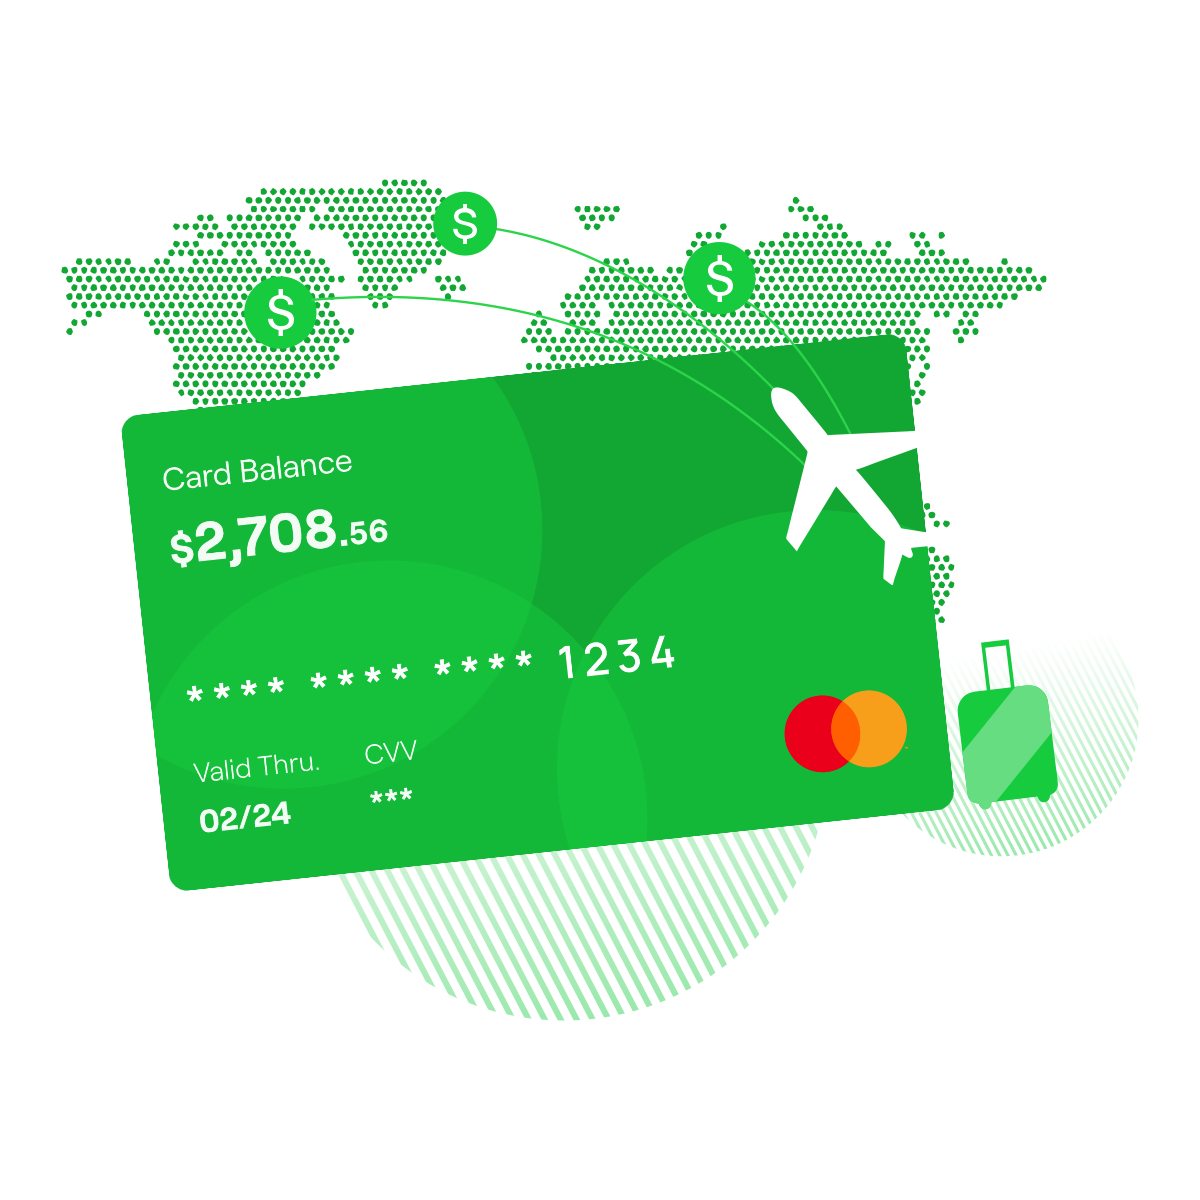 Cardwisechoice | Virtual Visa Mastercard - Home